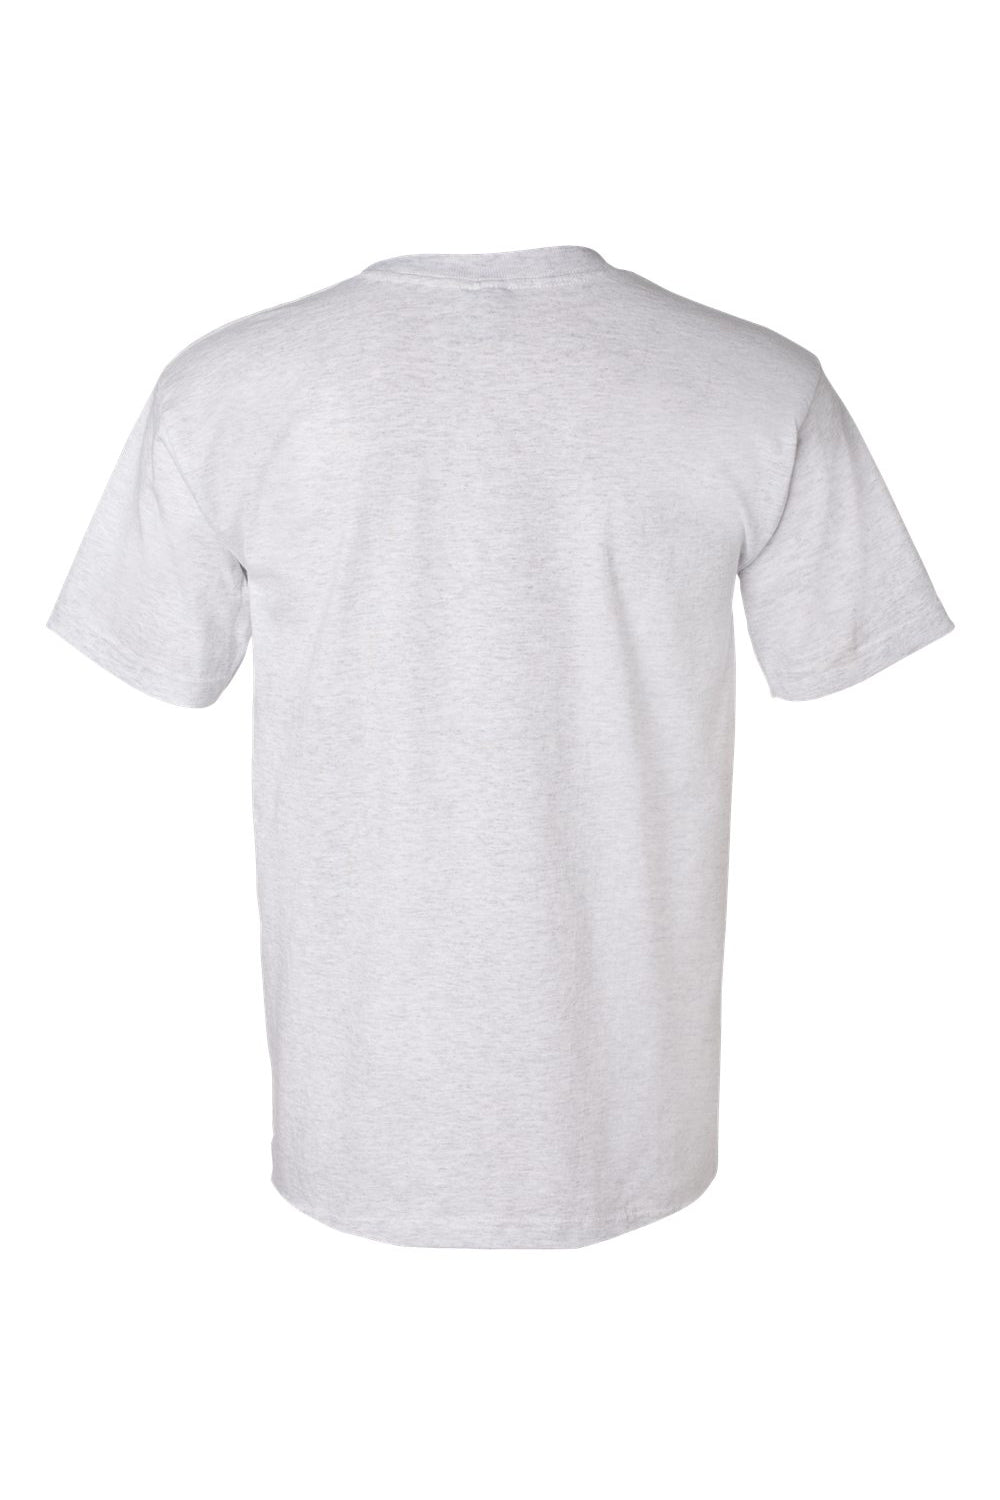 Bayside BA7100 Mens USA Made Short Sleeve Crewneck T-Shirt w/ Pocket Ash Grey Flat Back